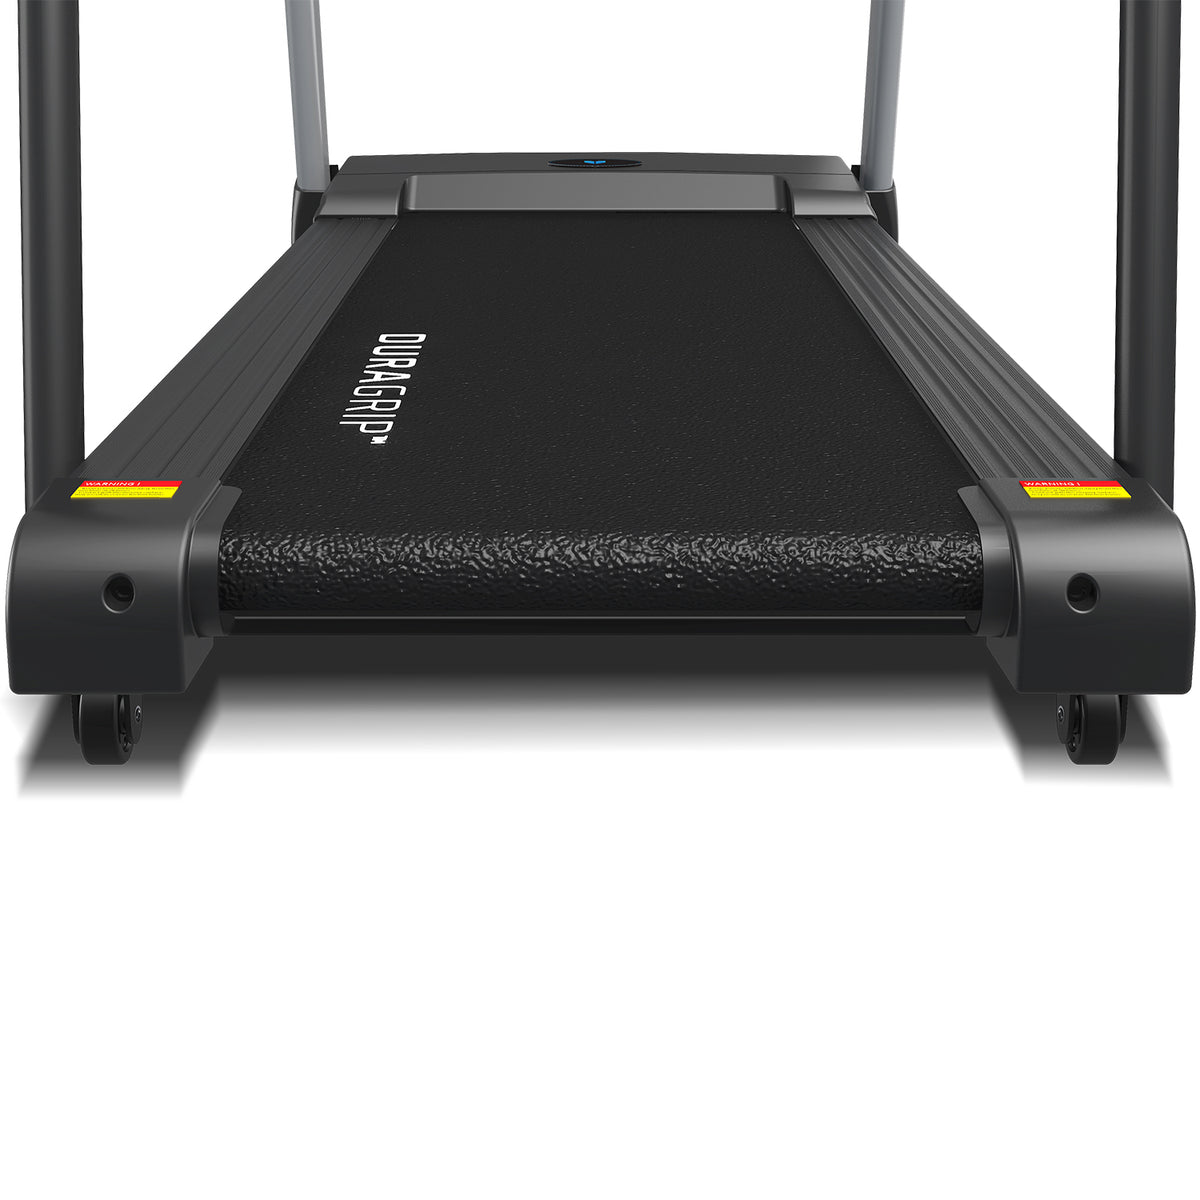 Lifespan Fitness Reformer Treadmill